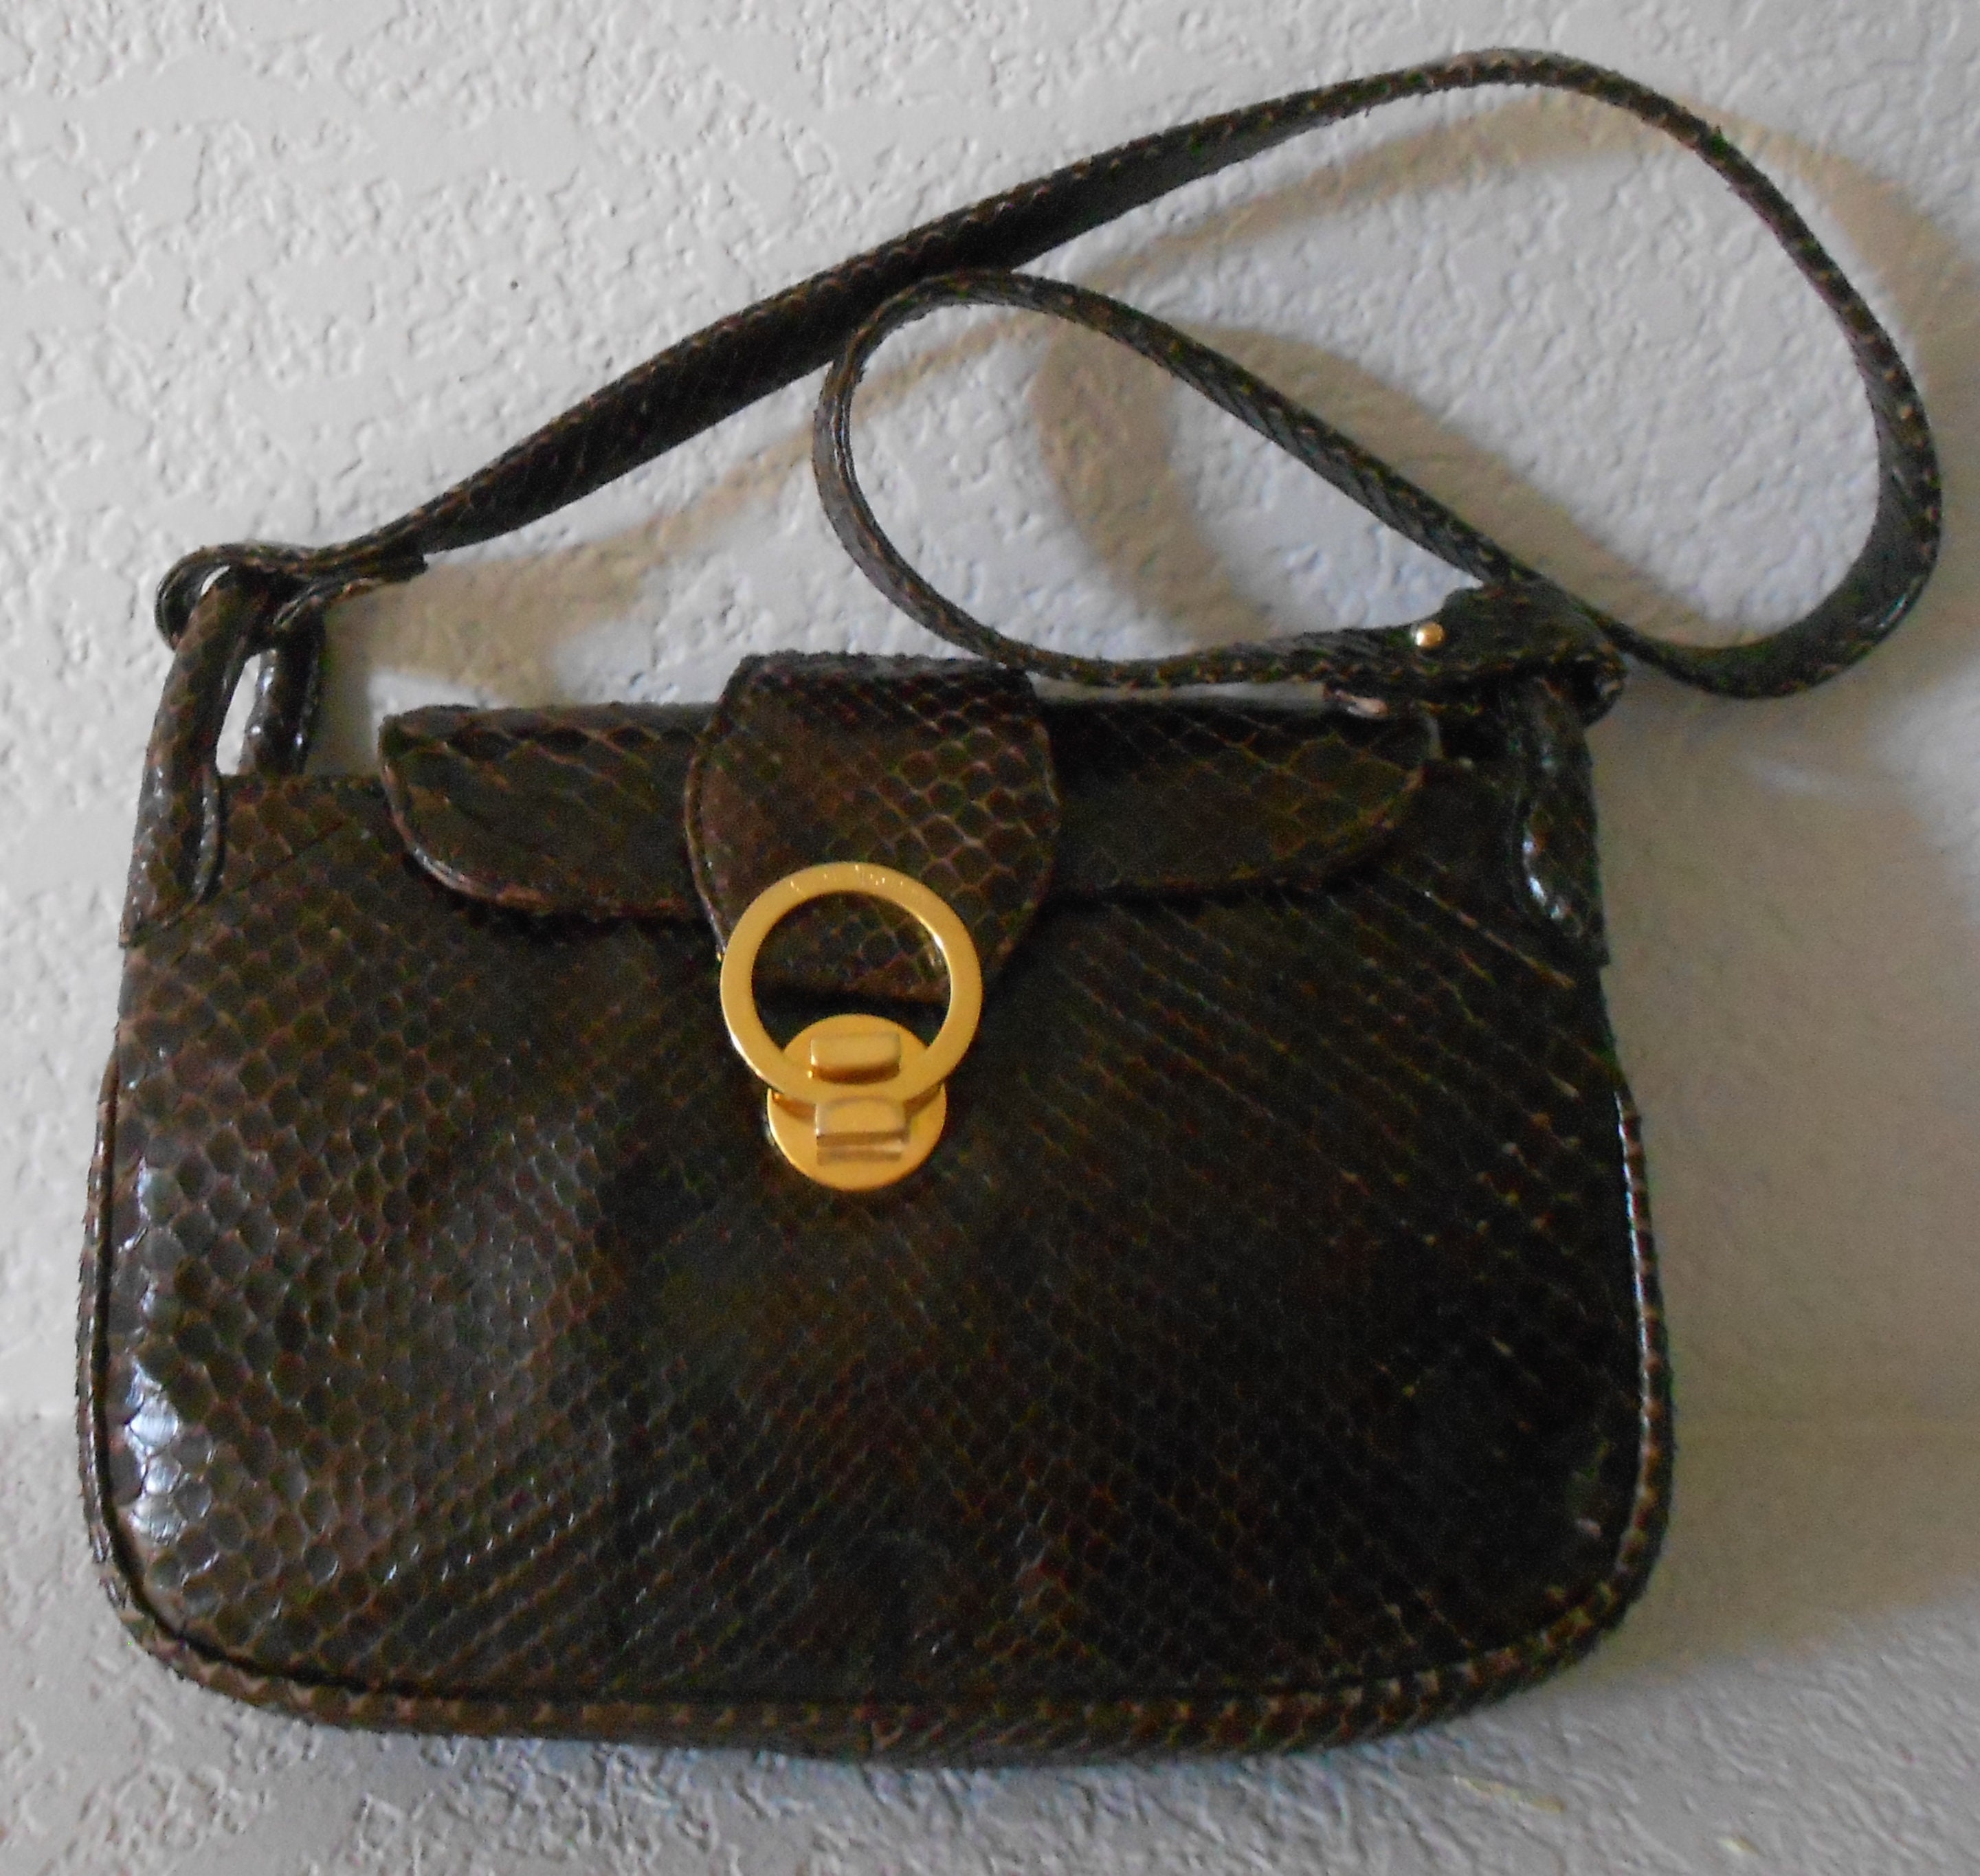 Valentino Bags Anakin Black Crossbody bag VBS43312NERO - Gifts for him